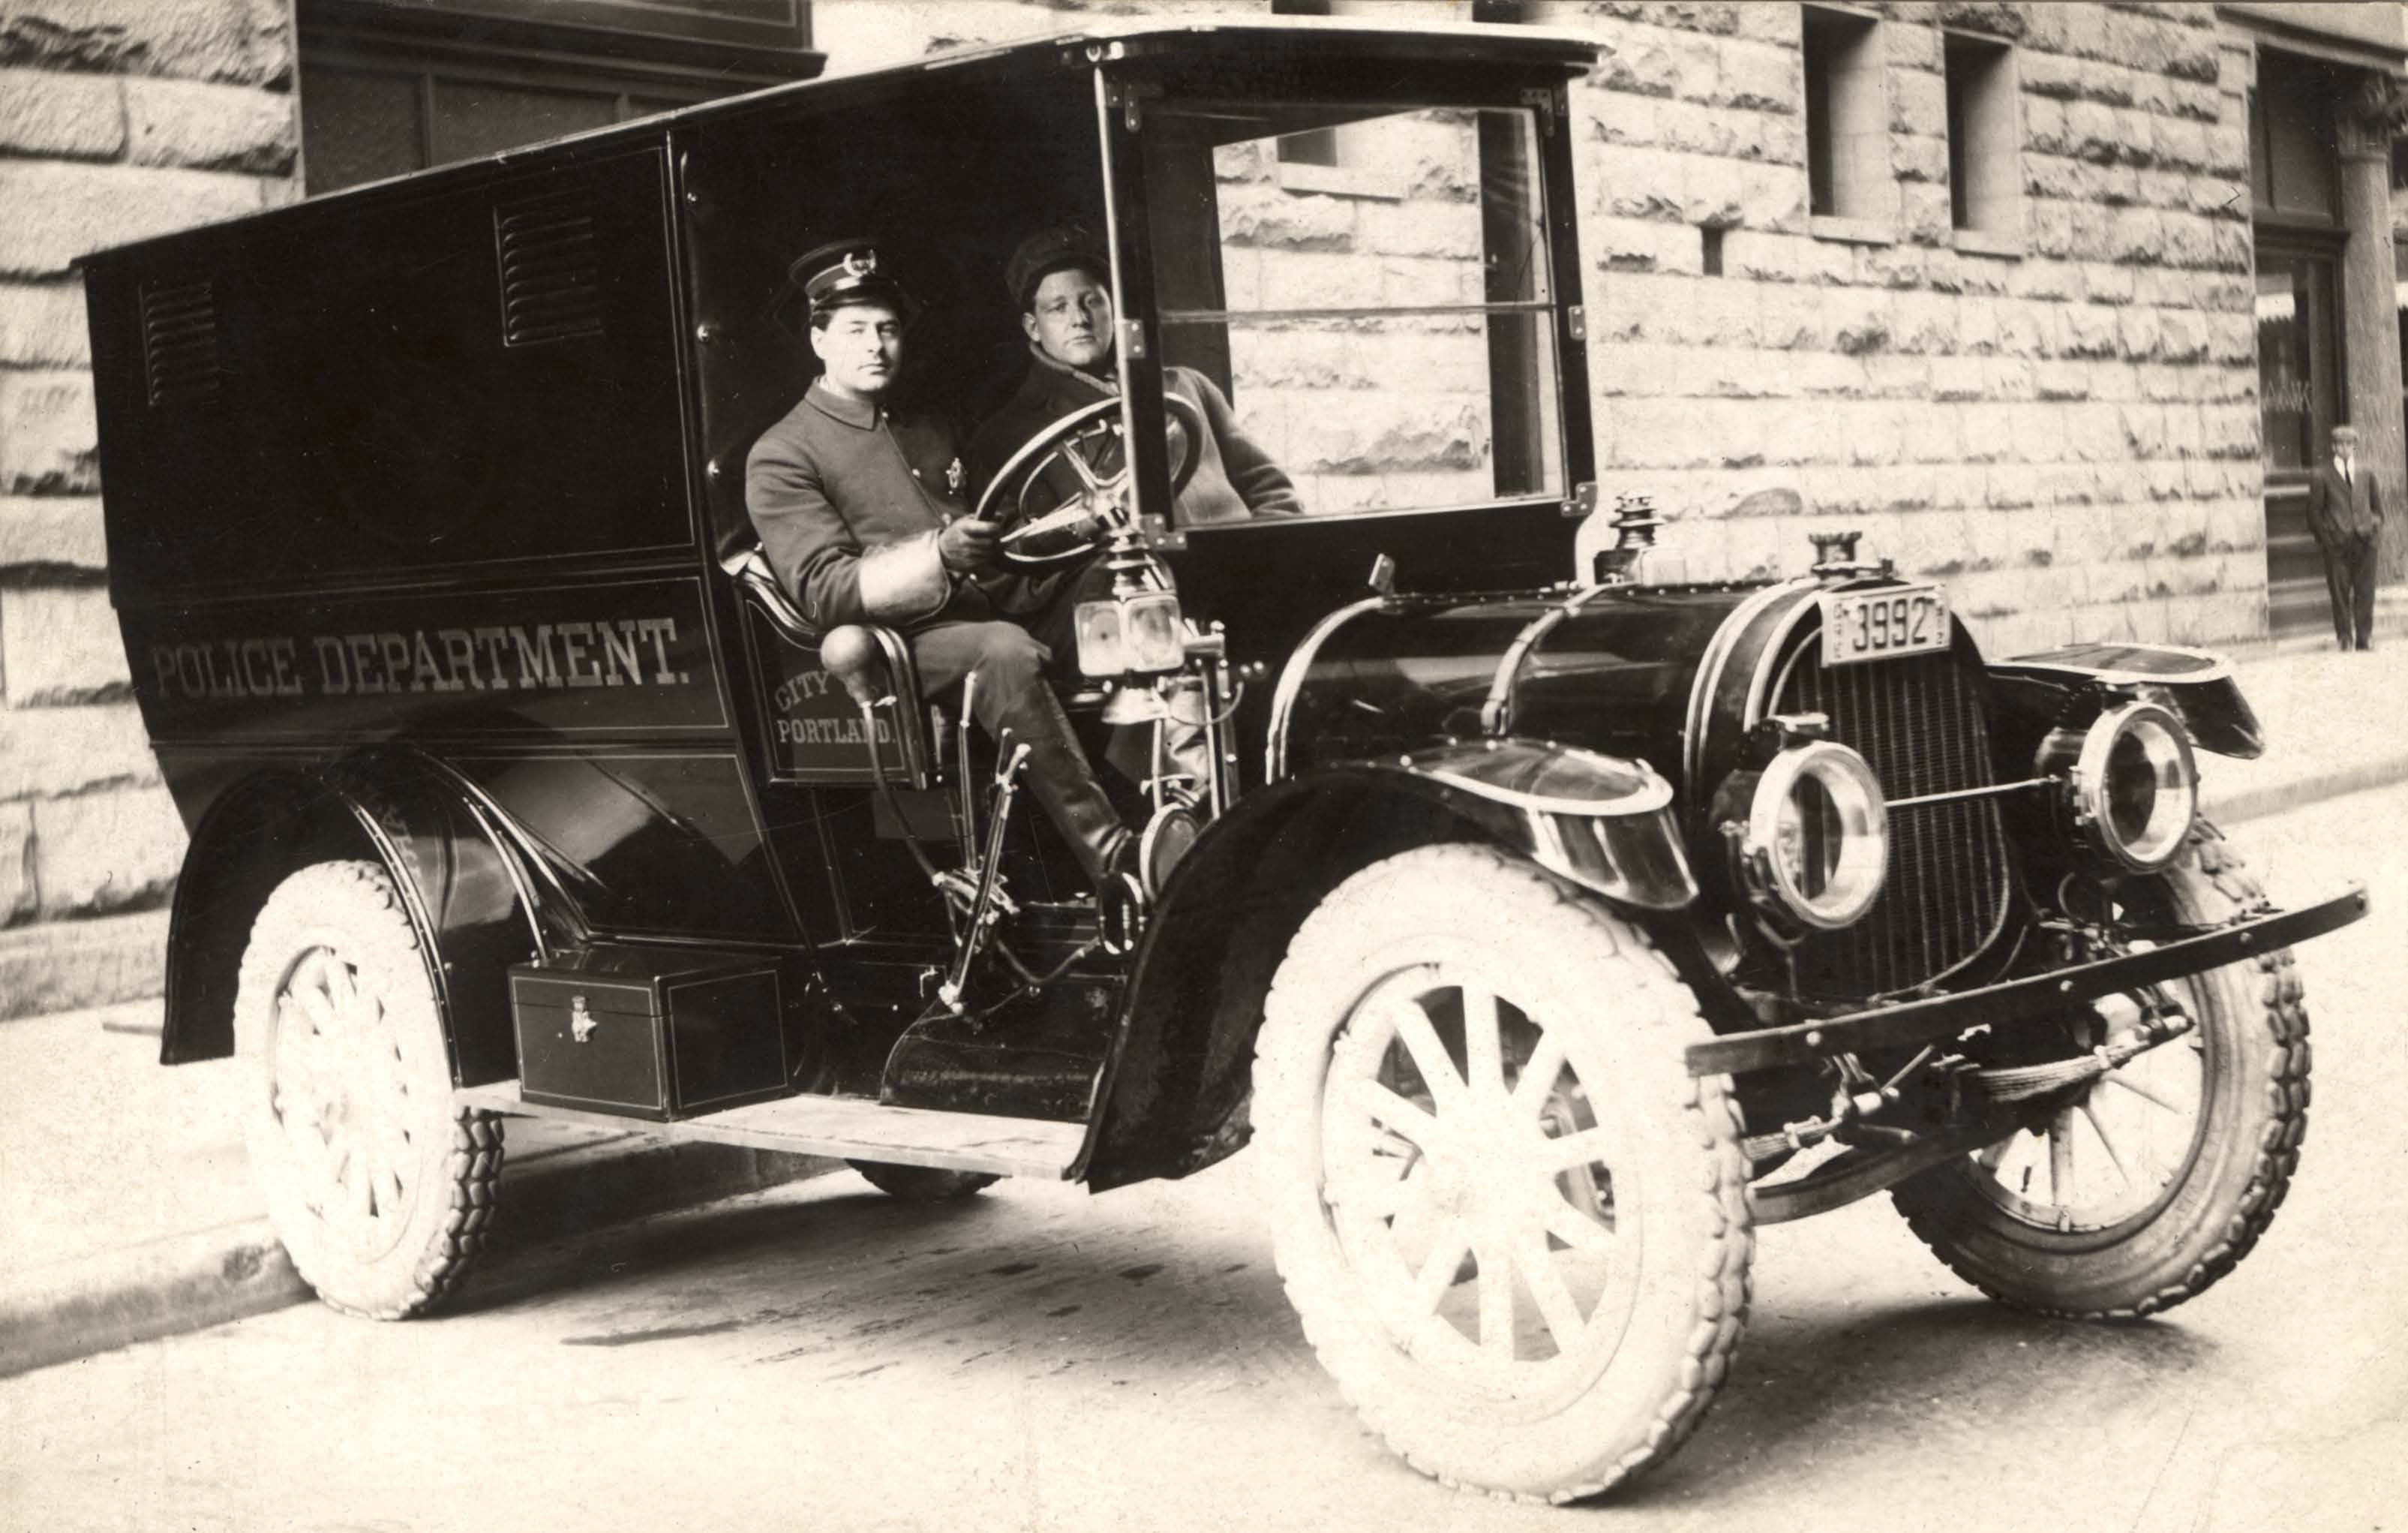 a2004-002-851-pope-hartford-paddy-wagon-1912.jpg